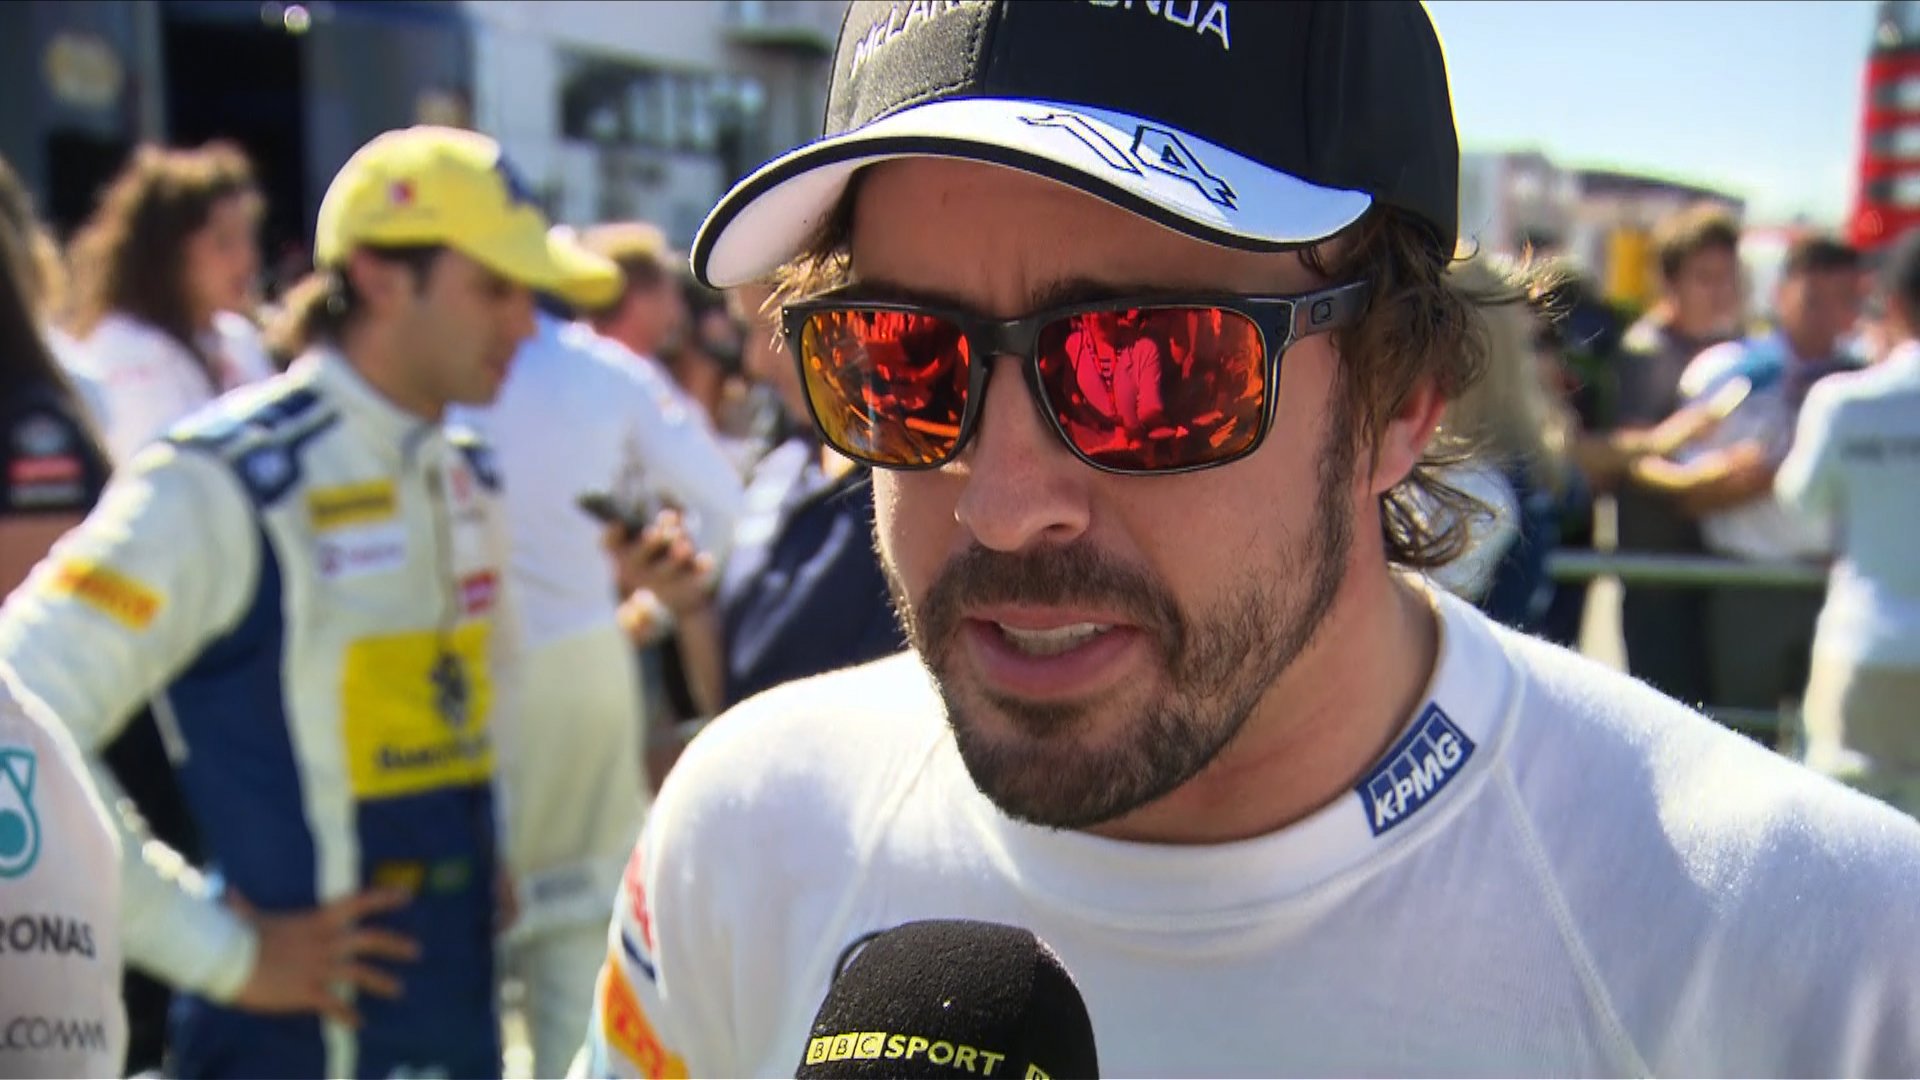 McLaren-Honda's Fernando Alonso was fifth in the Hungarian Grand Prix